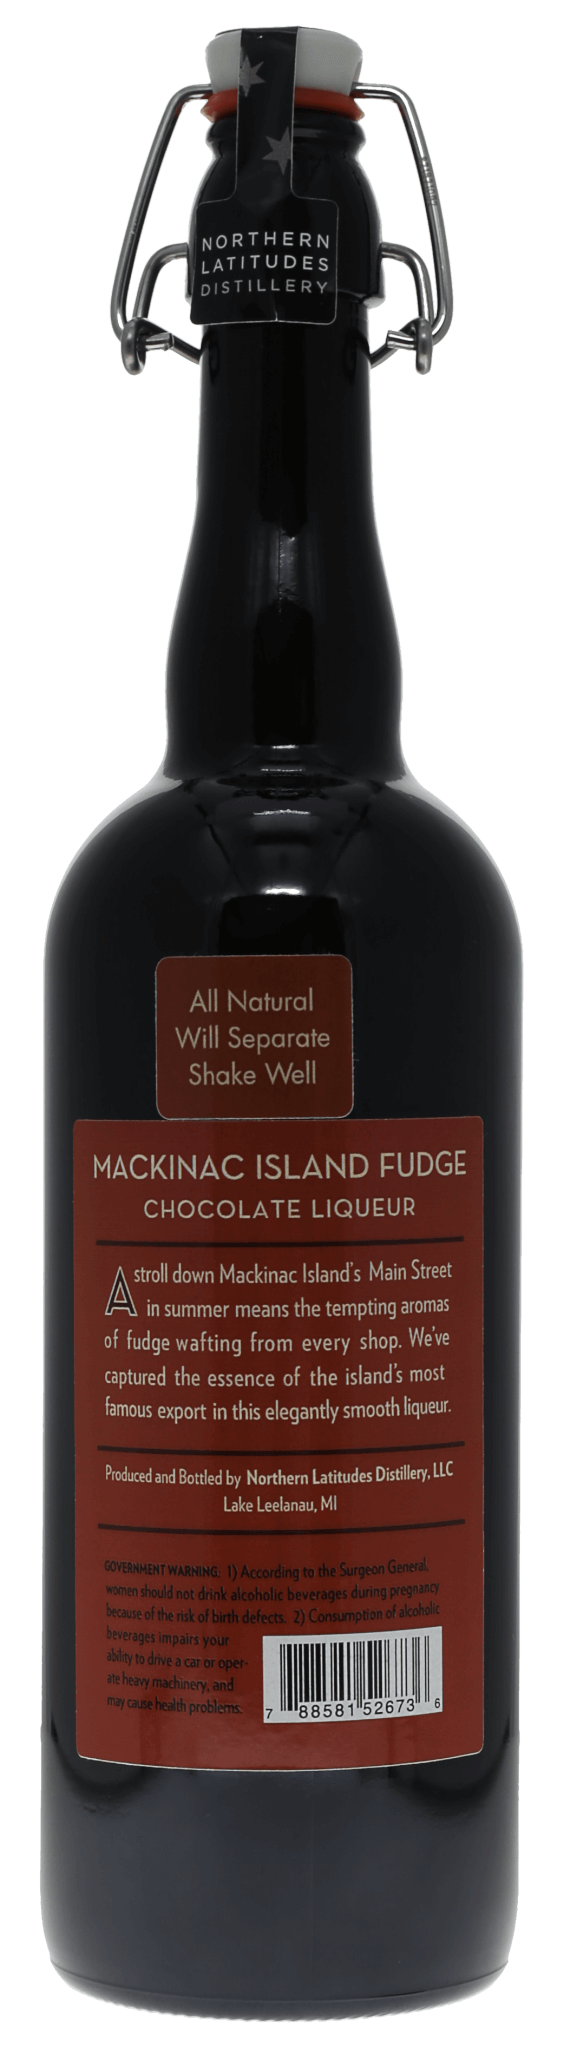 Mackinac Island Fudge Chocolate Liqueur